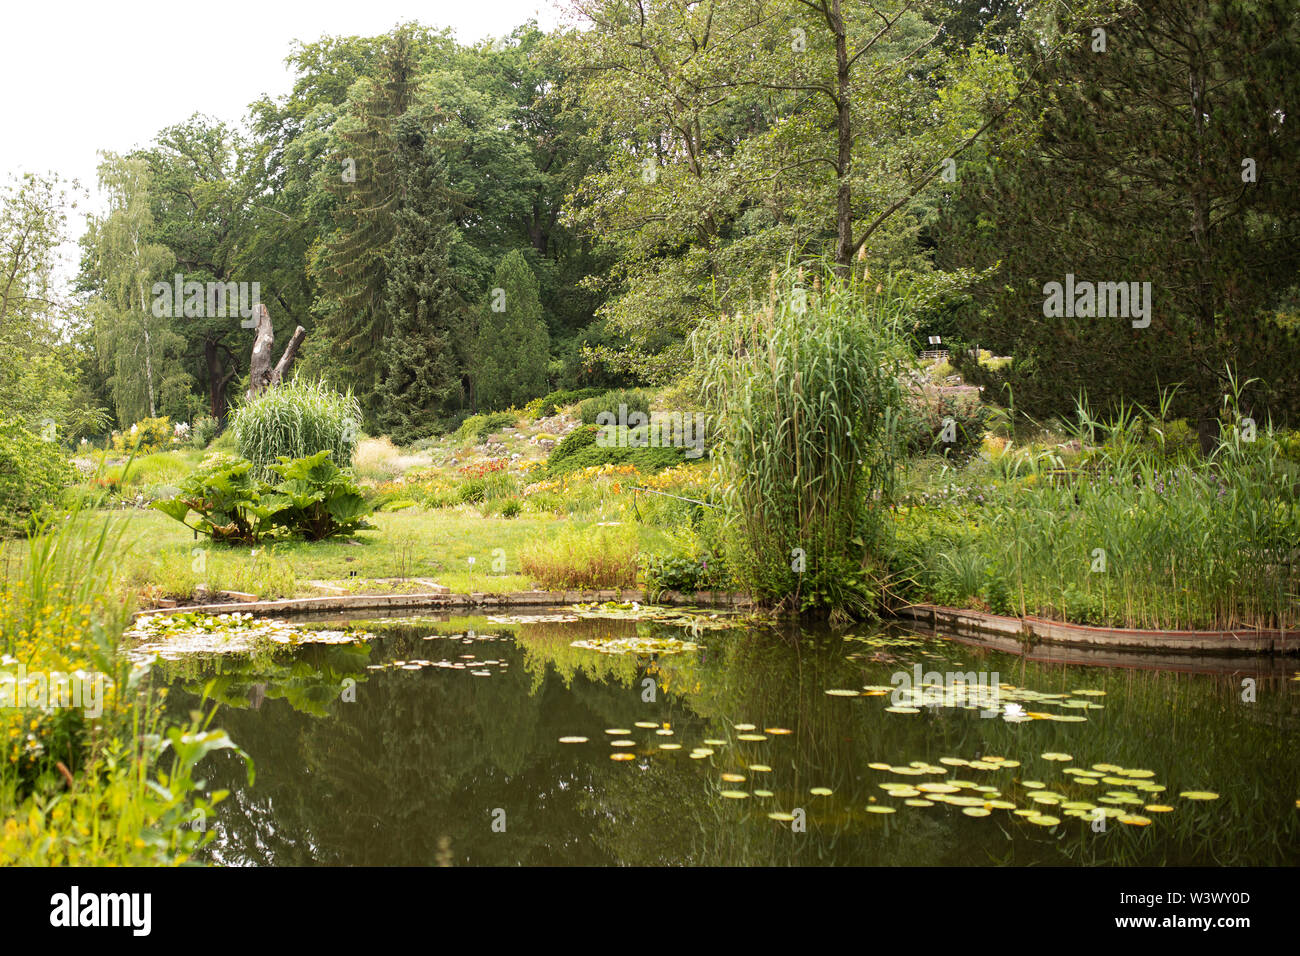 Il giardino d'acqua nel Giardino Paradiso del Giardino Botanico di Potsdam, Germania. Foto Stock